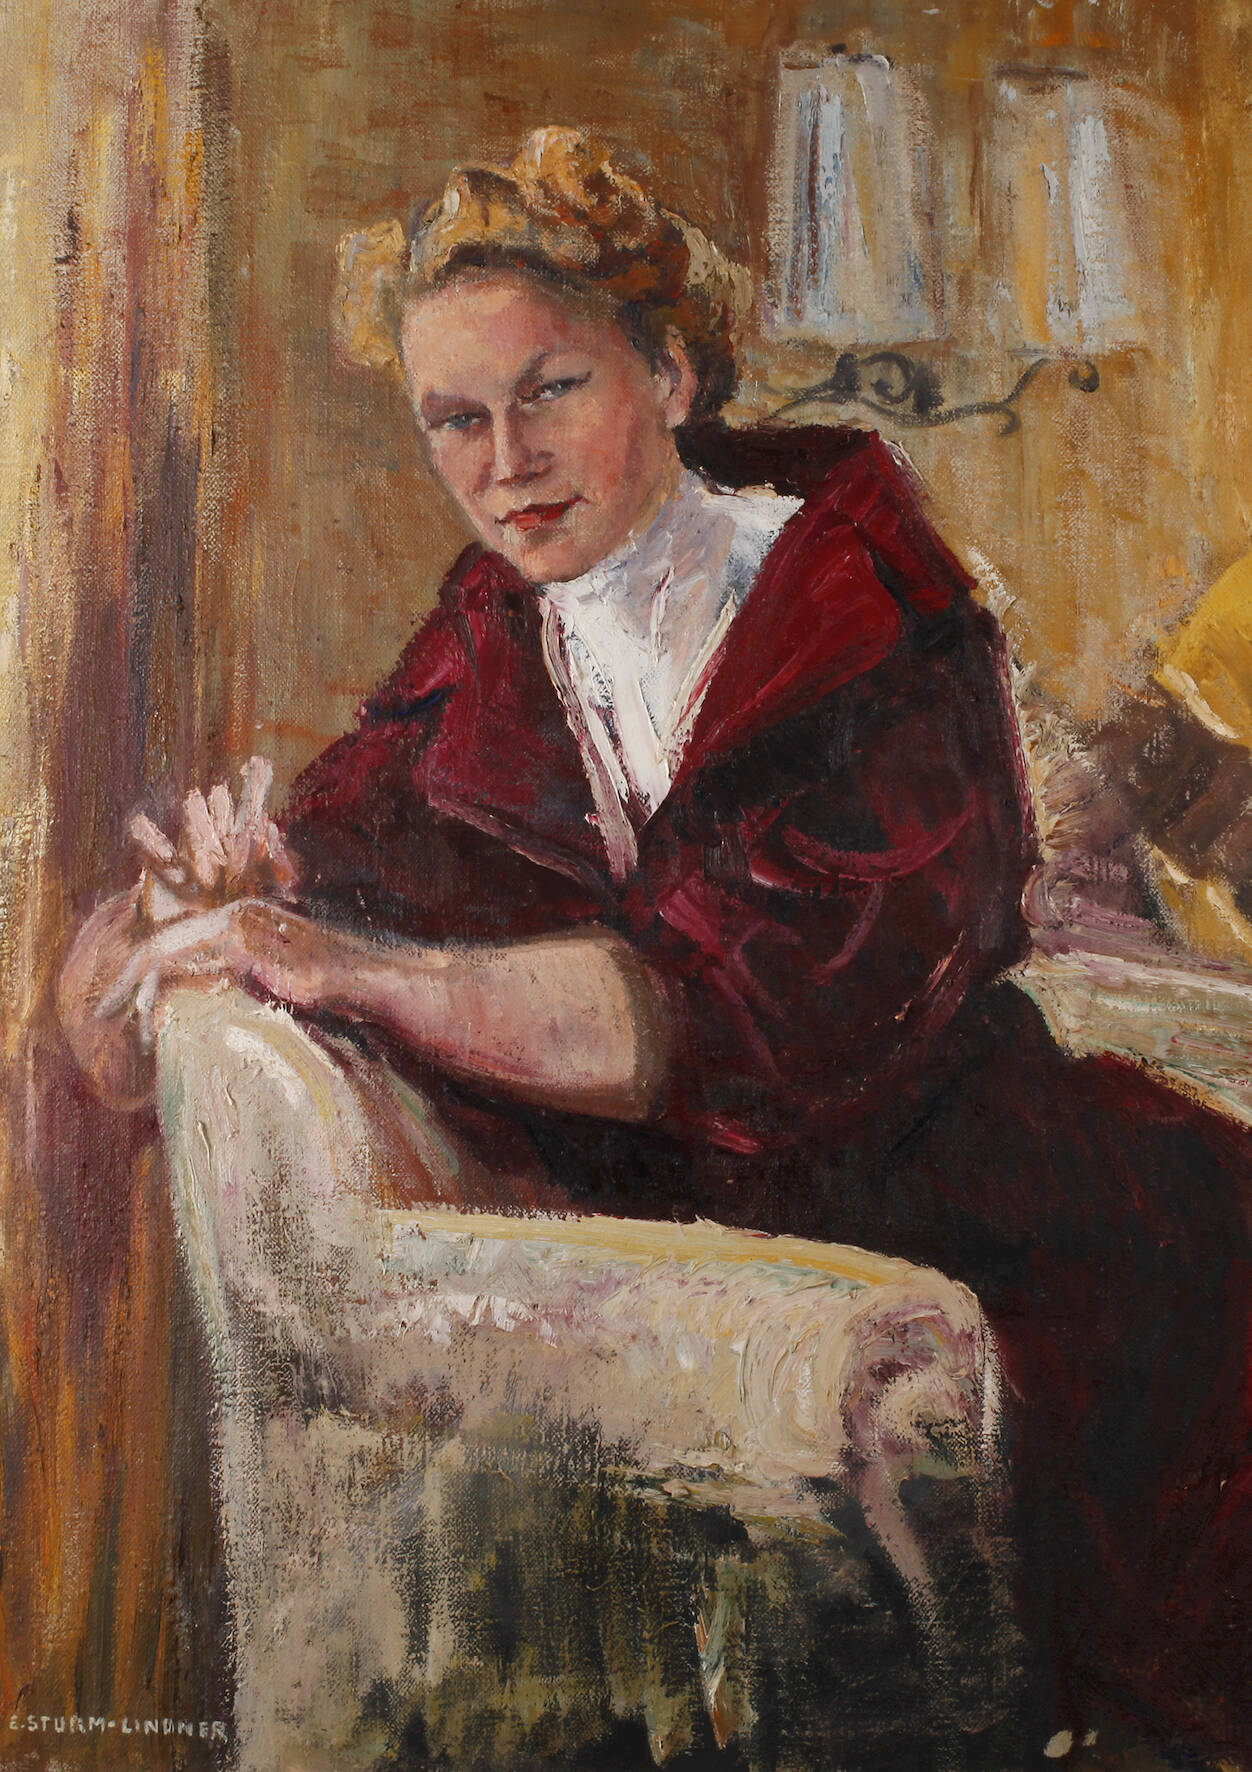 Elsa Sturm-Lindner, Mädchenportrait